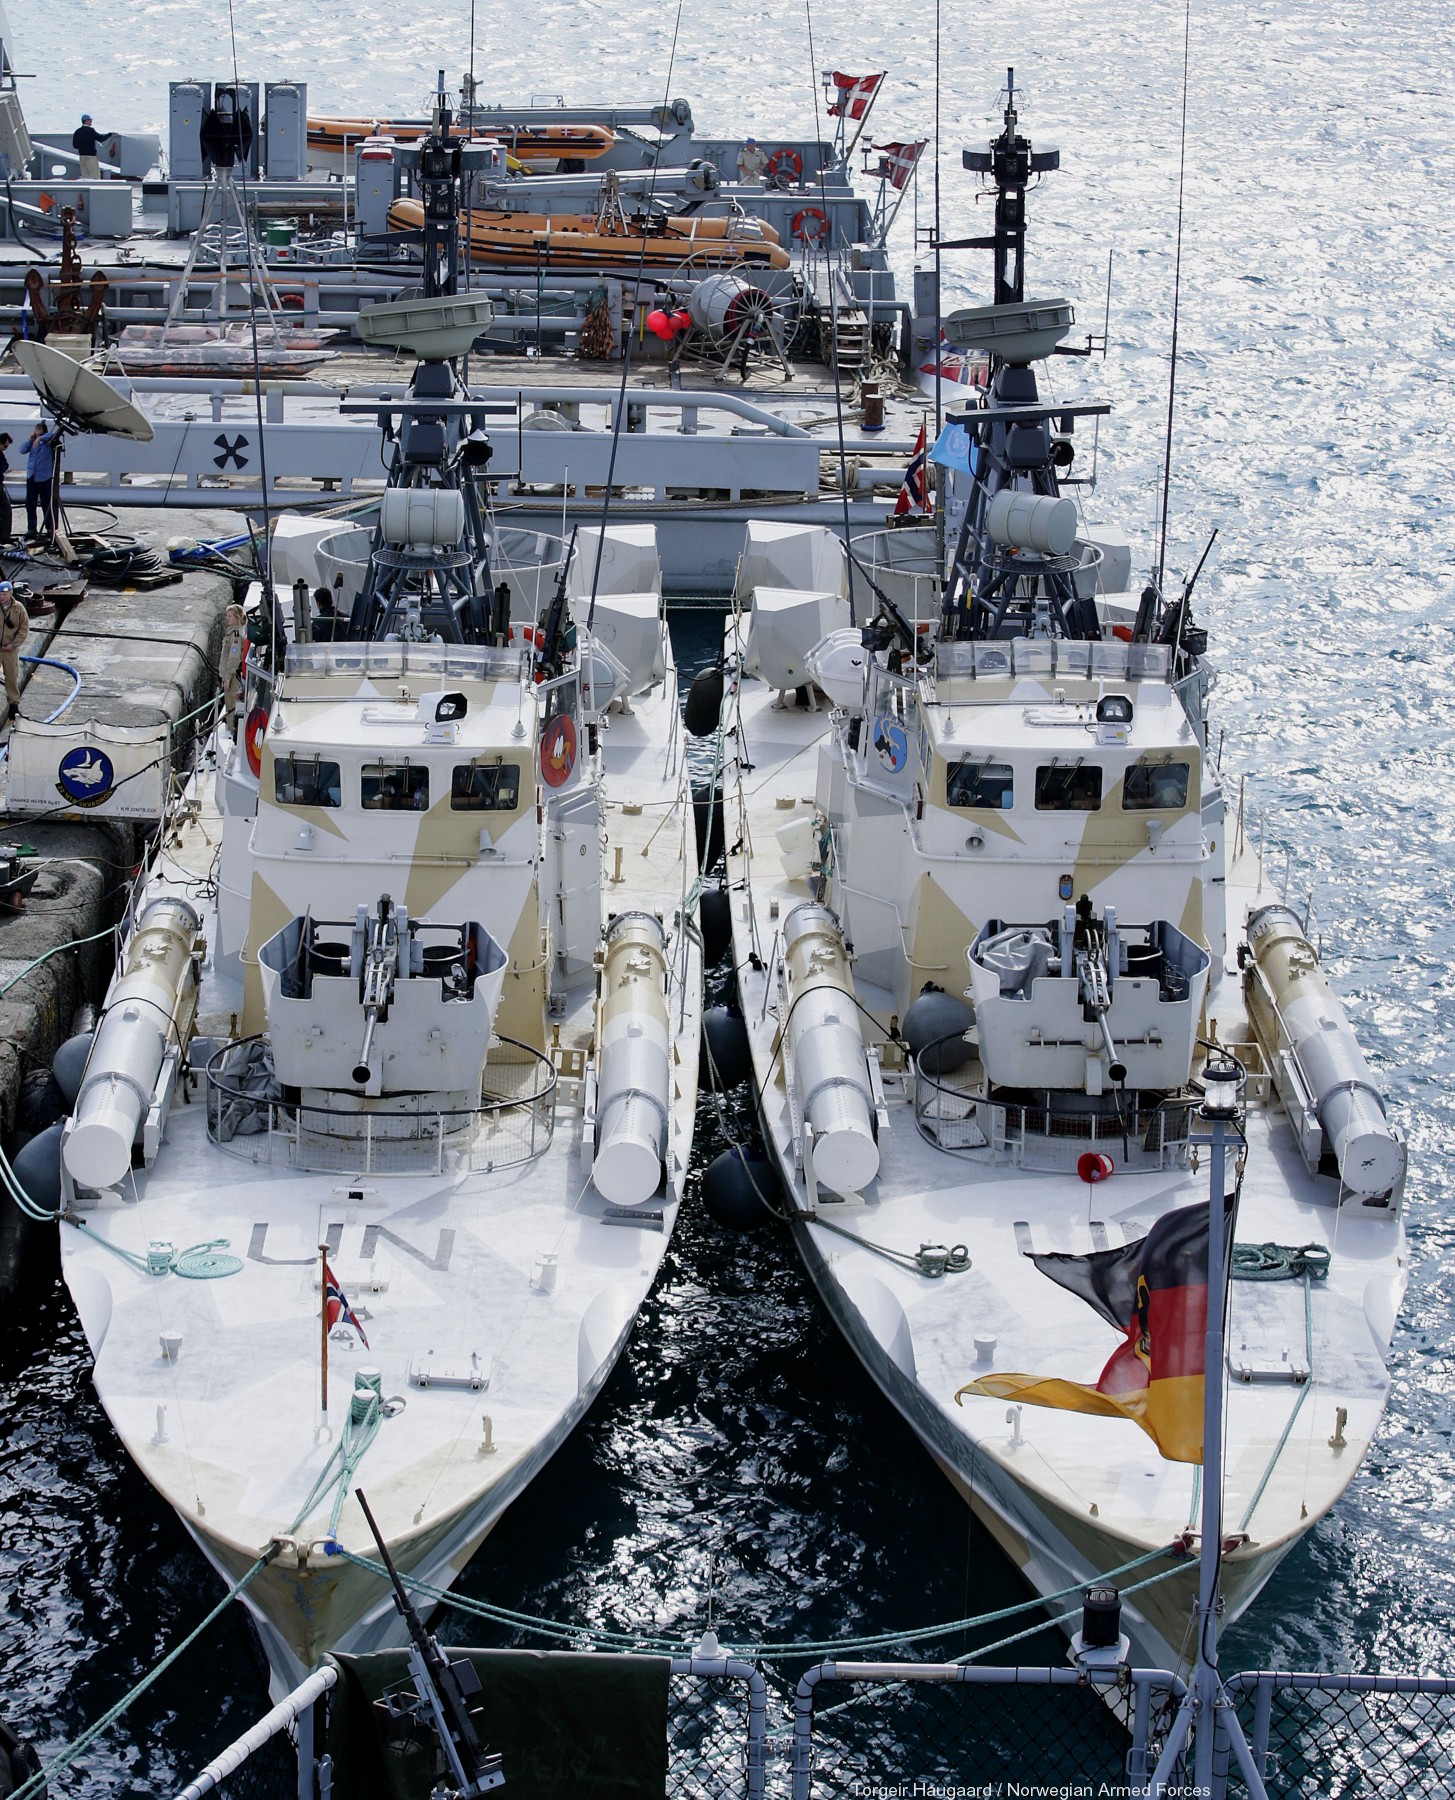 hauk class fast attack missile torpedo craft boat knm norwegian navy sjøforsvaret 02c